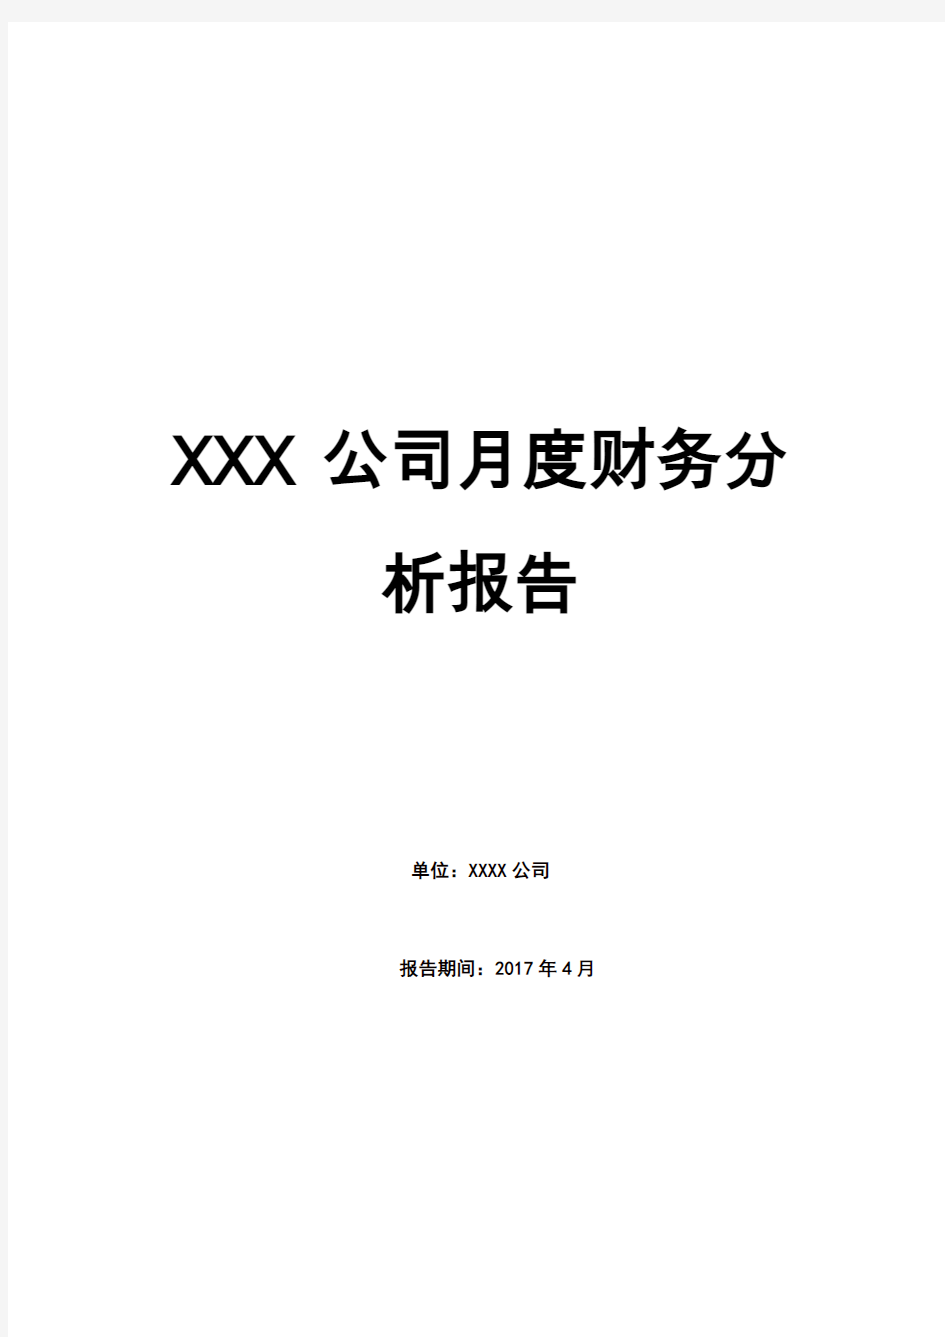 XXX公司月度财务分析报告(实例)